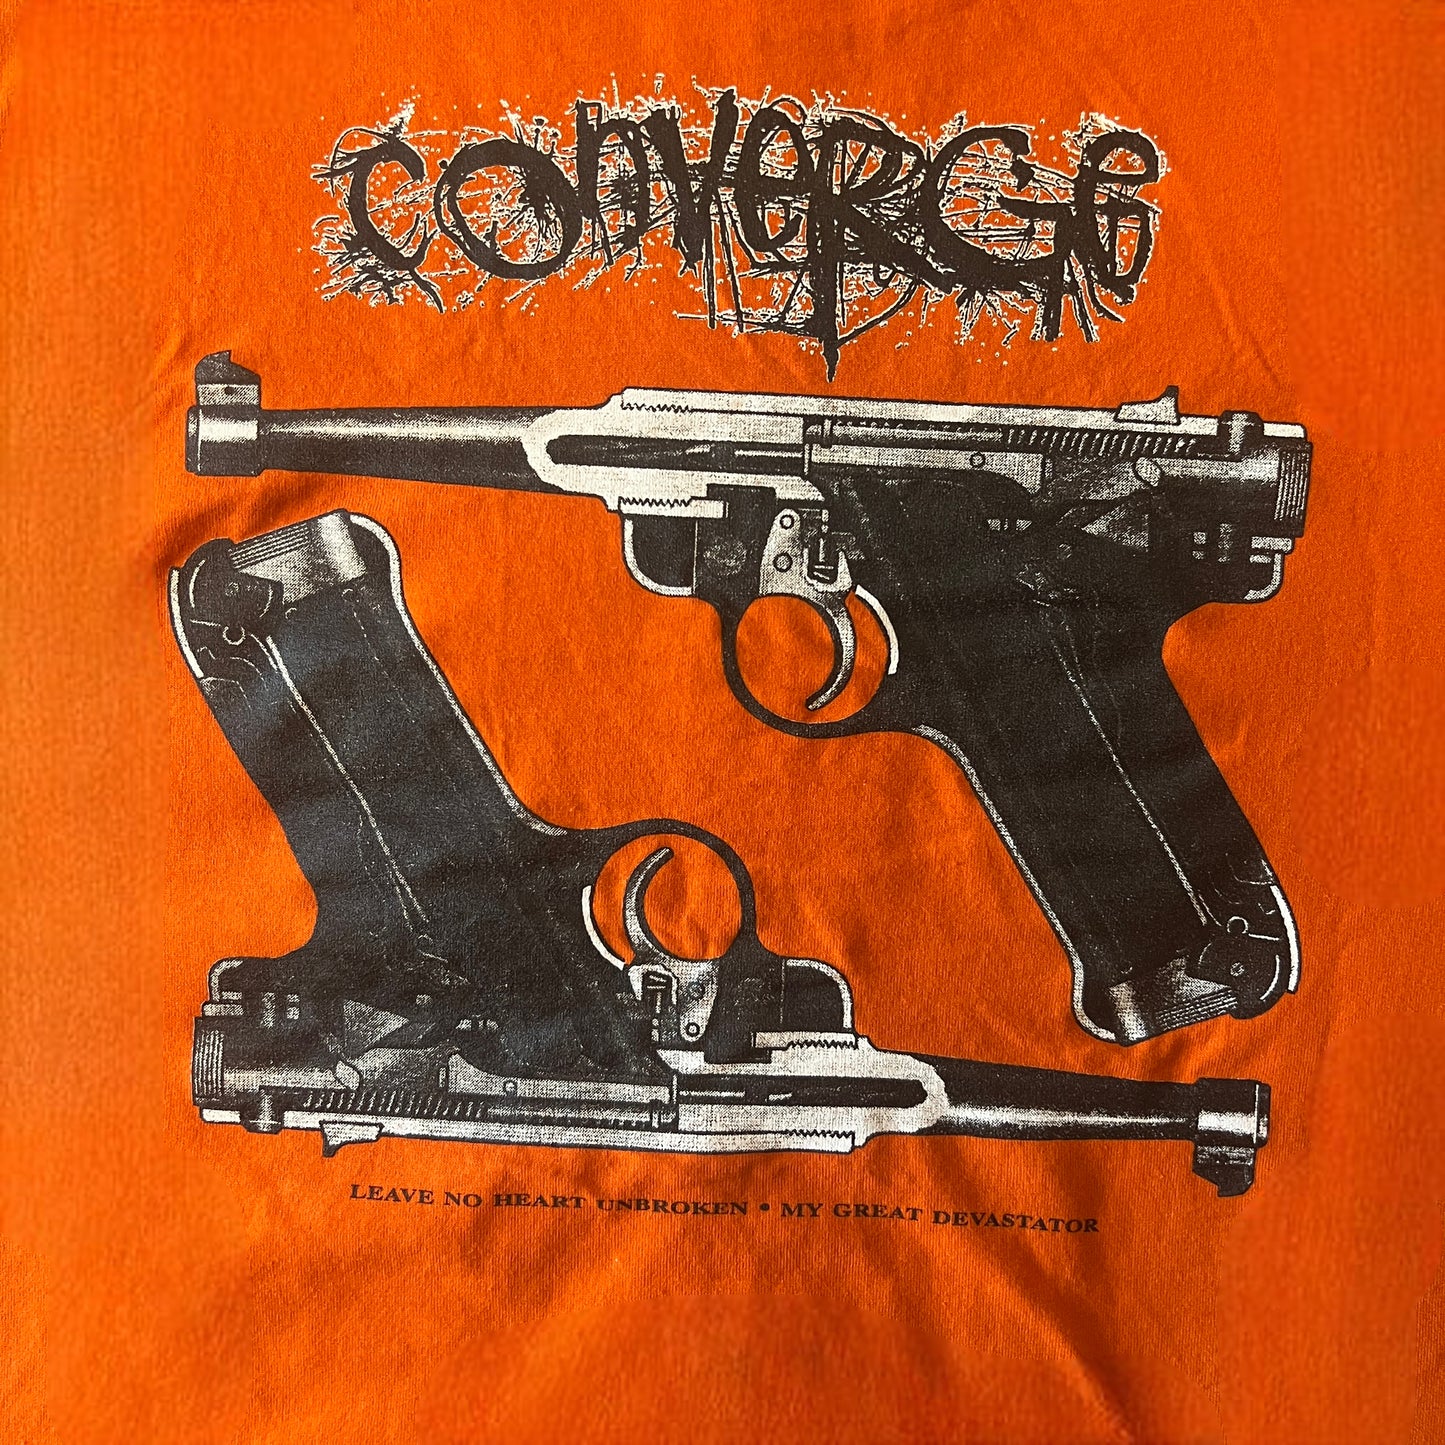 Converge Band My Great Devastator Poacher Diaries 1999 Vintage T-Shirt Size XL